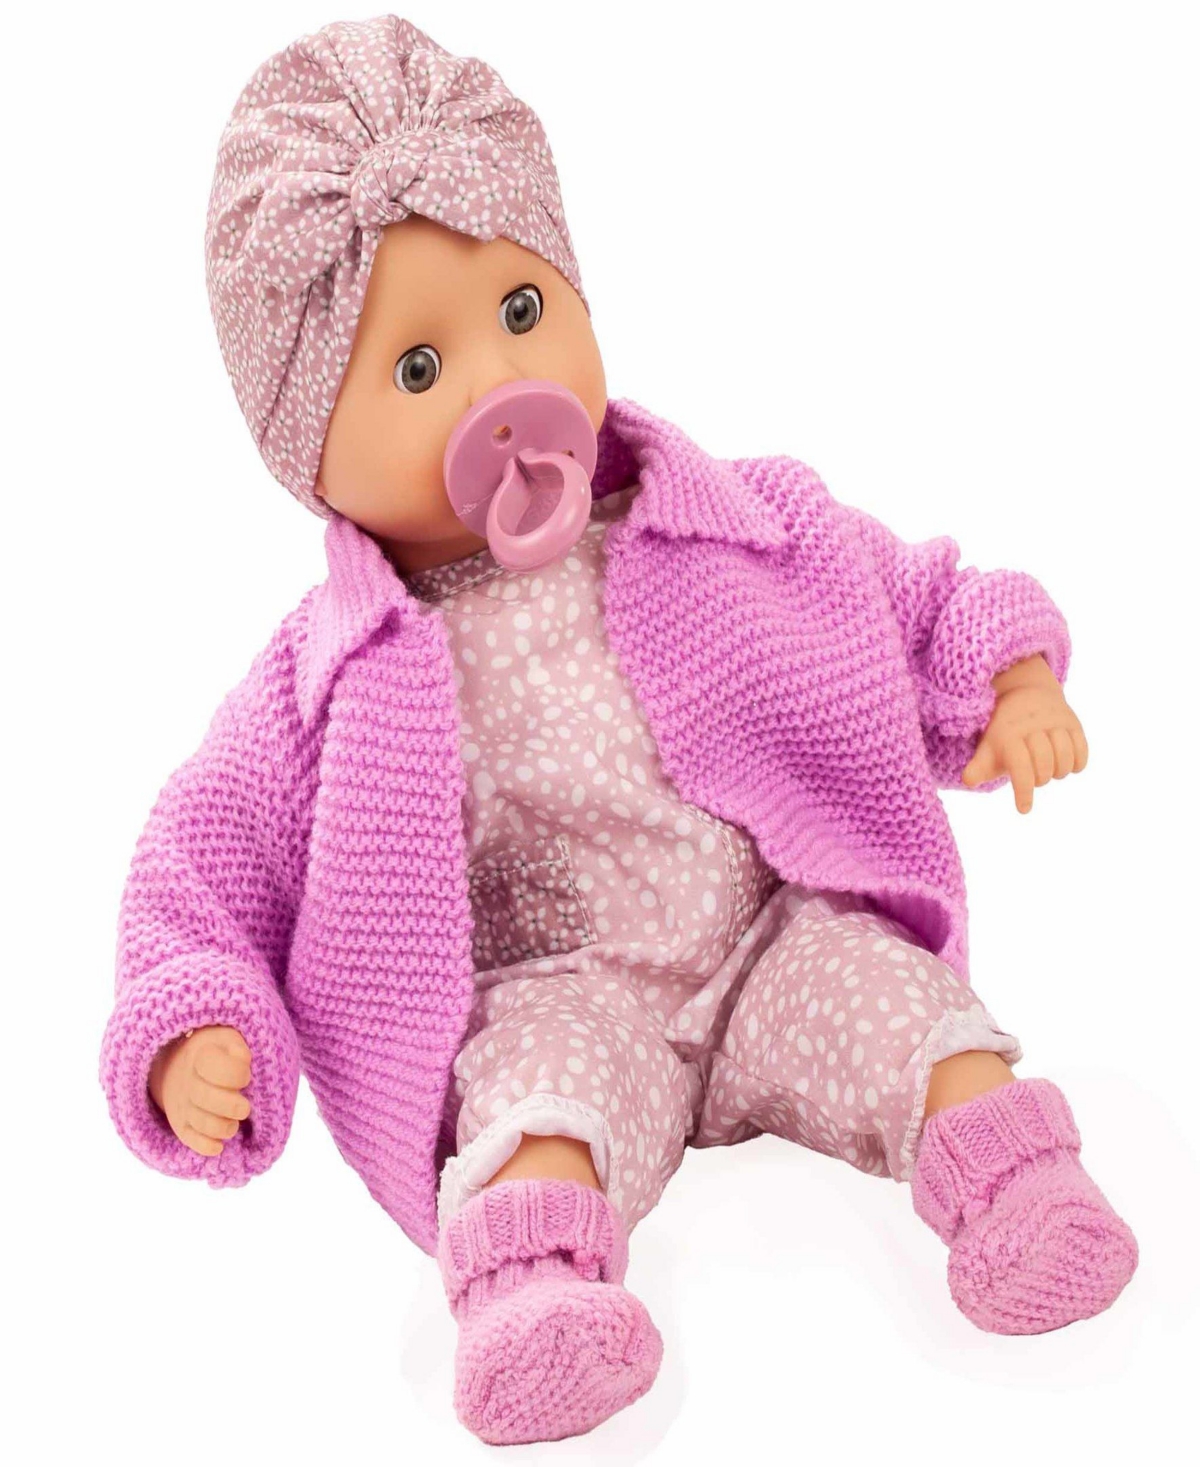 Götz Muffin Soft Mood Bald Baby Doll In Multi